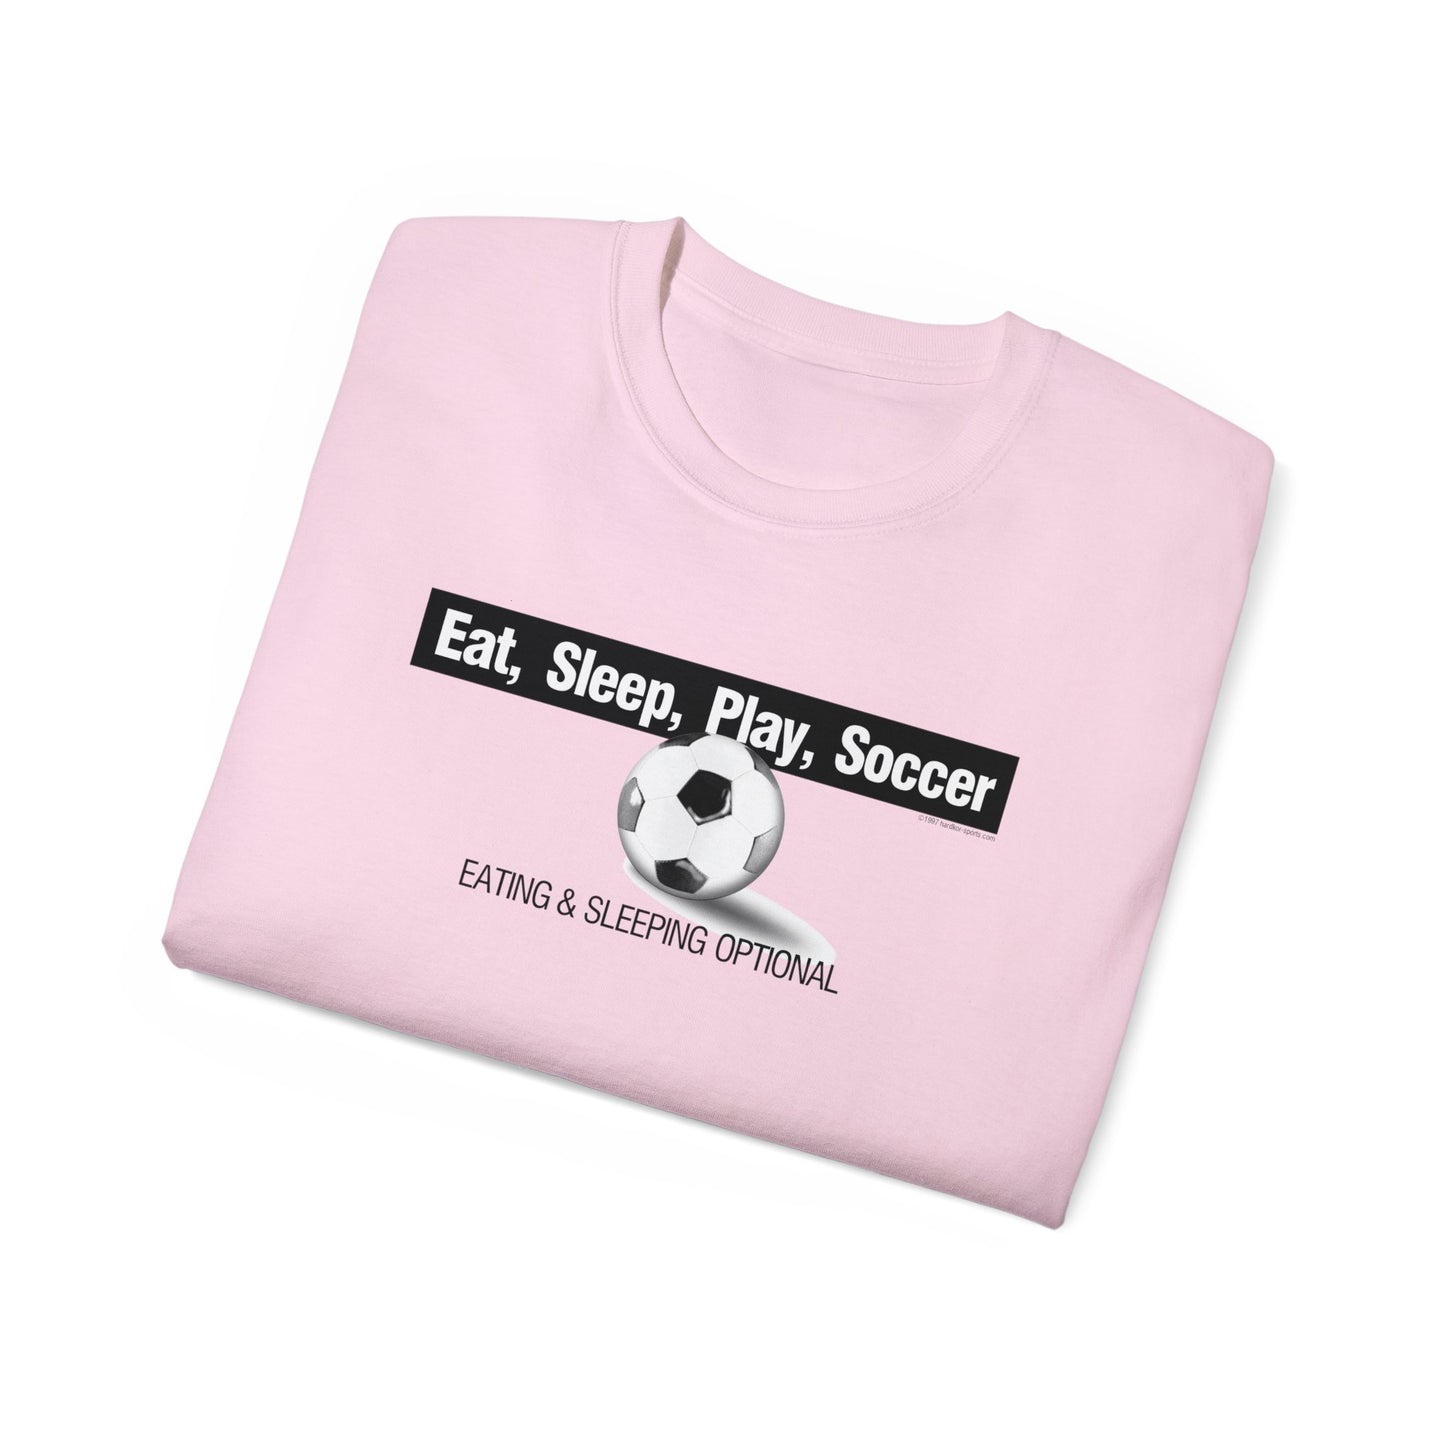 Eat Sleep Play Soccer, Eating and Sleeping Optional, Funny Soccer T-Shirt, Unisex Ultra Cotton Tee, Soccer gift, Soccer t-shirt, tee